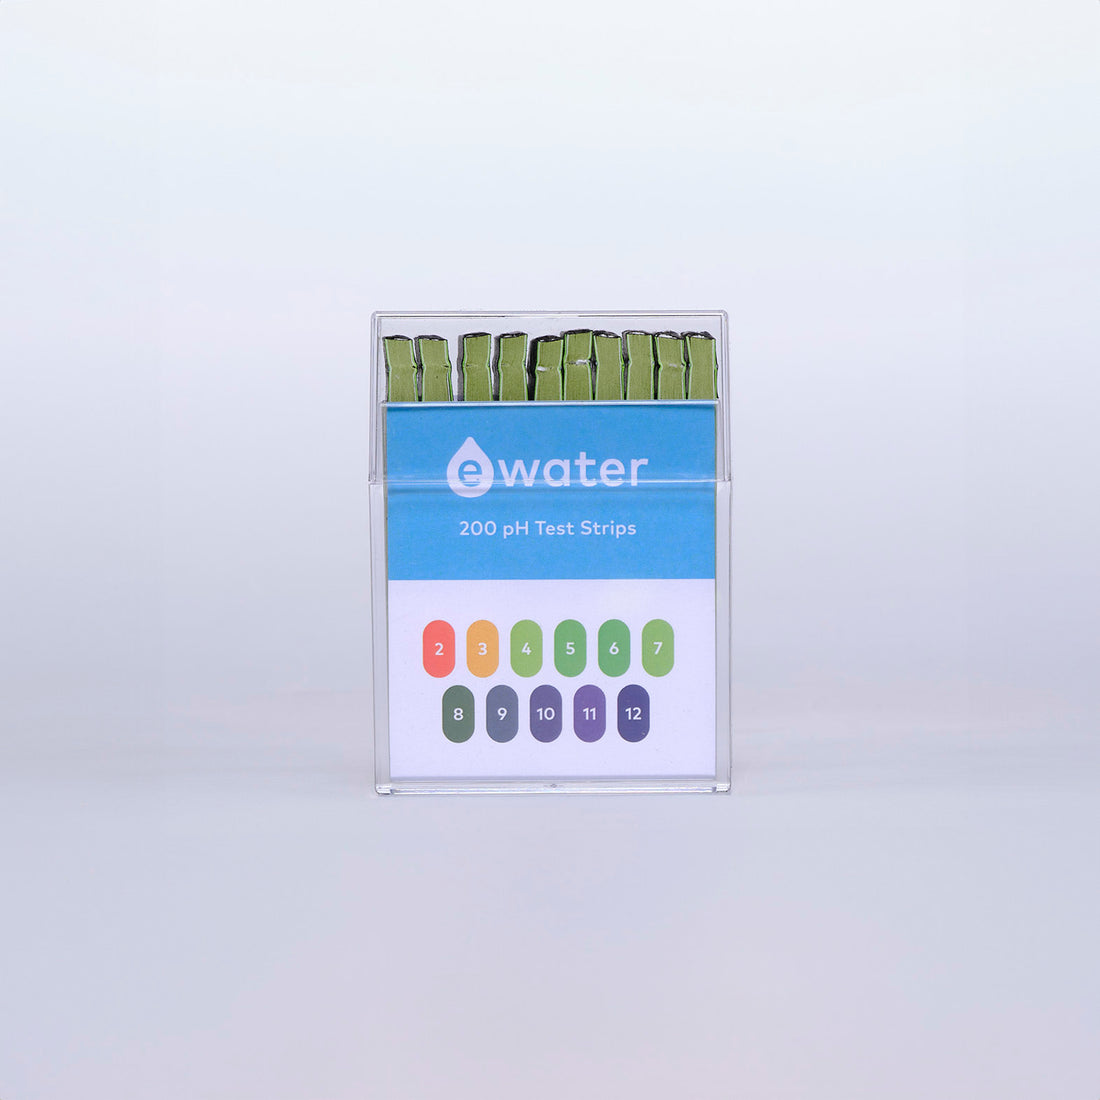 eWater Universal pH Test Strips